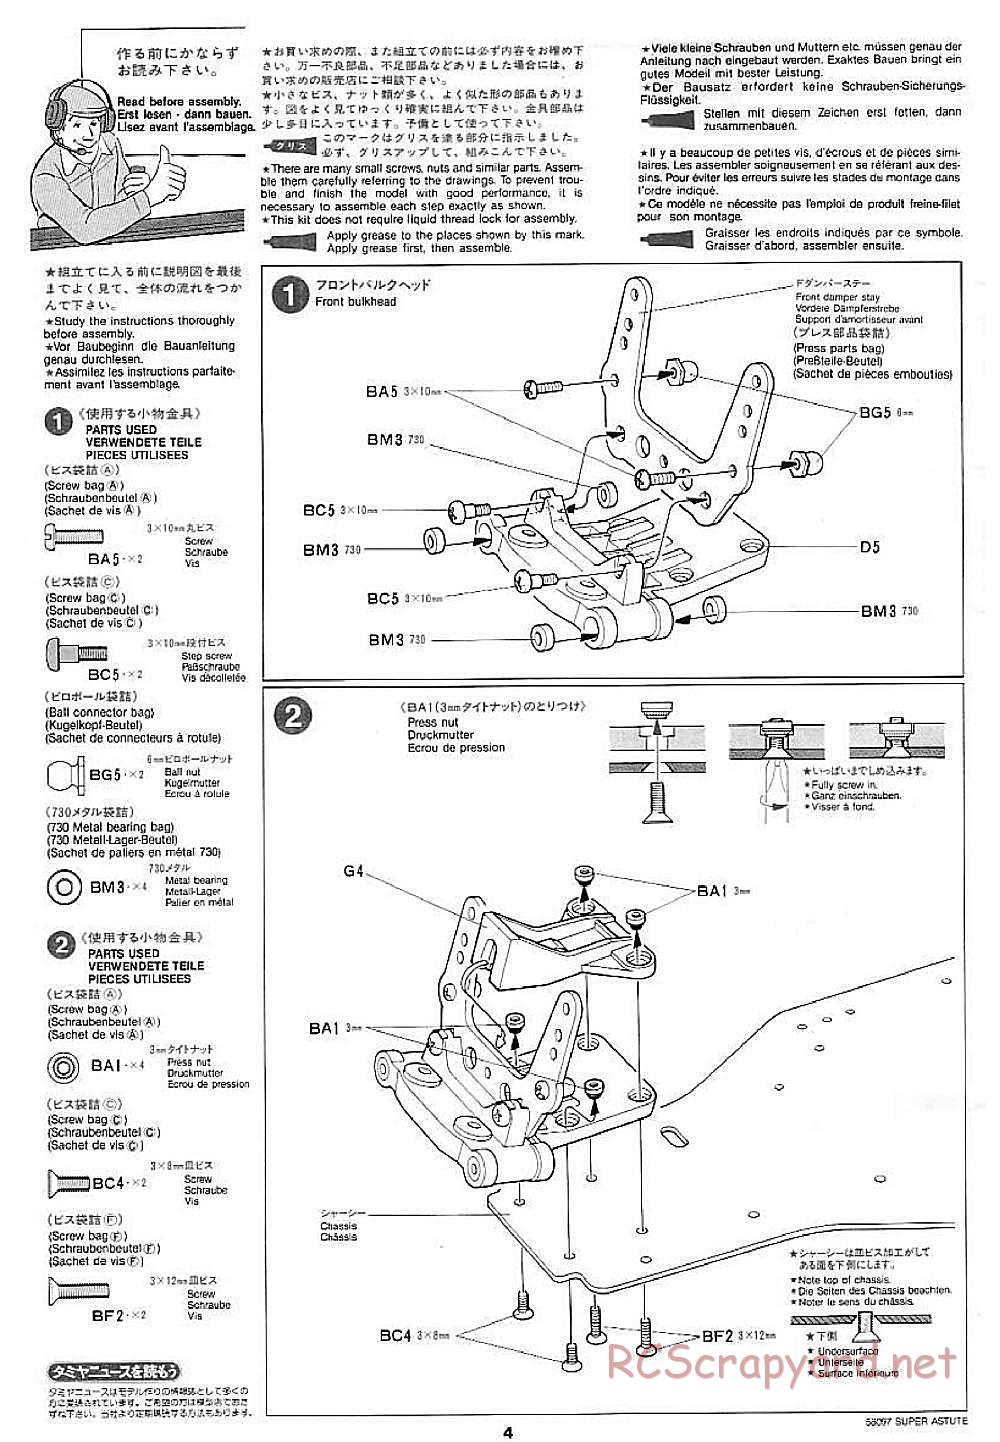 Tamiya - Super Astute - 58097 - Manual - Page 4